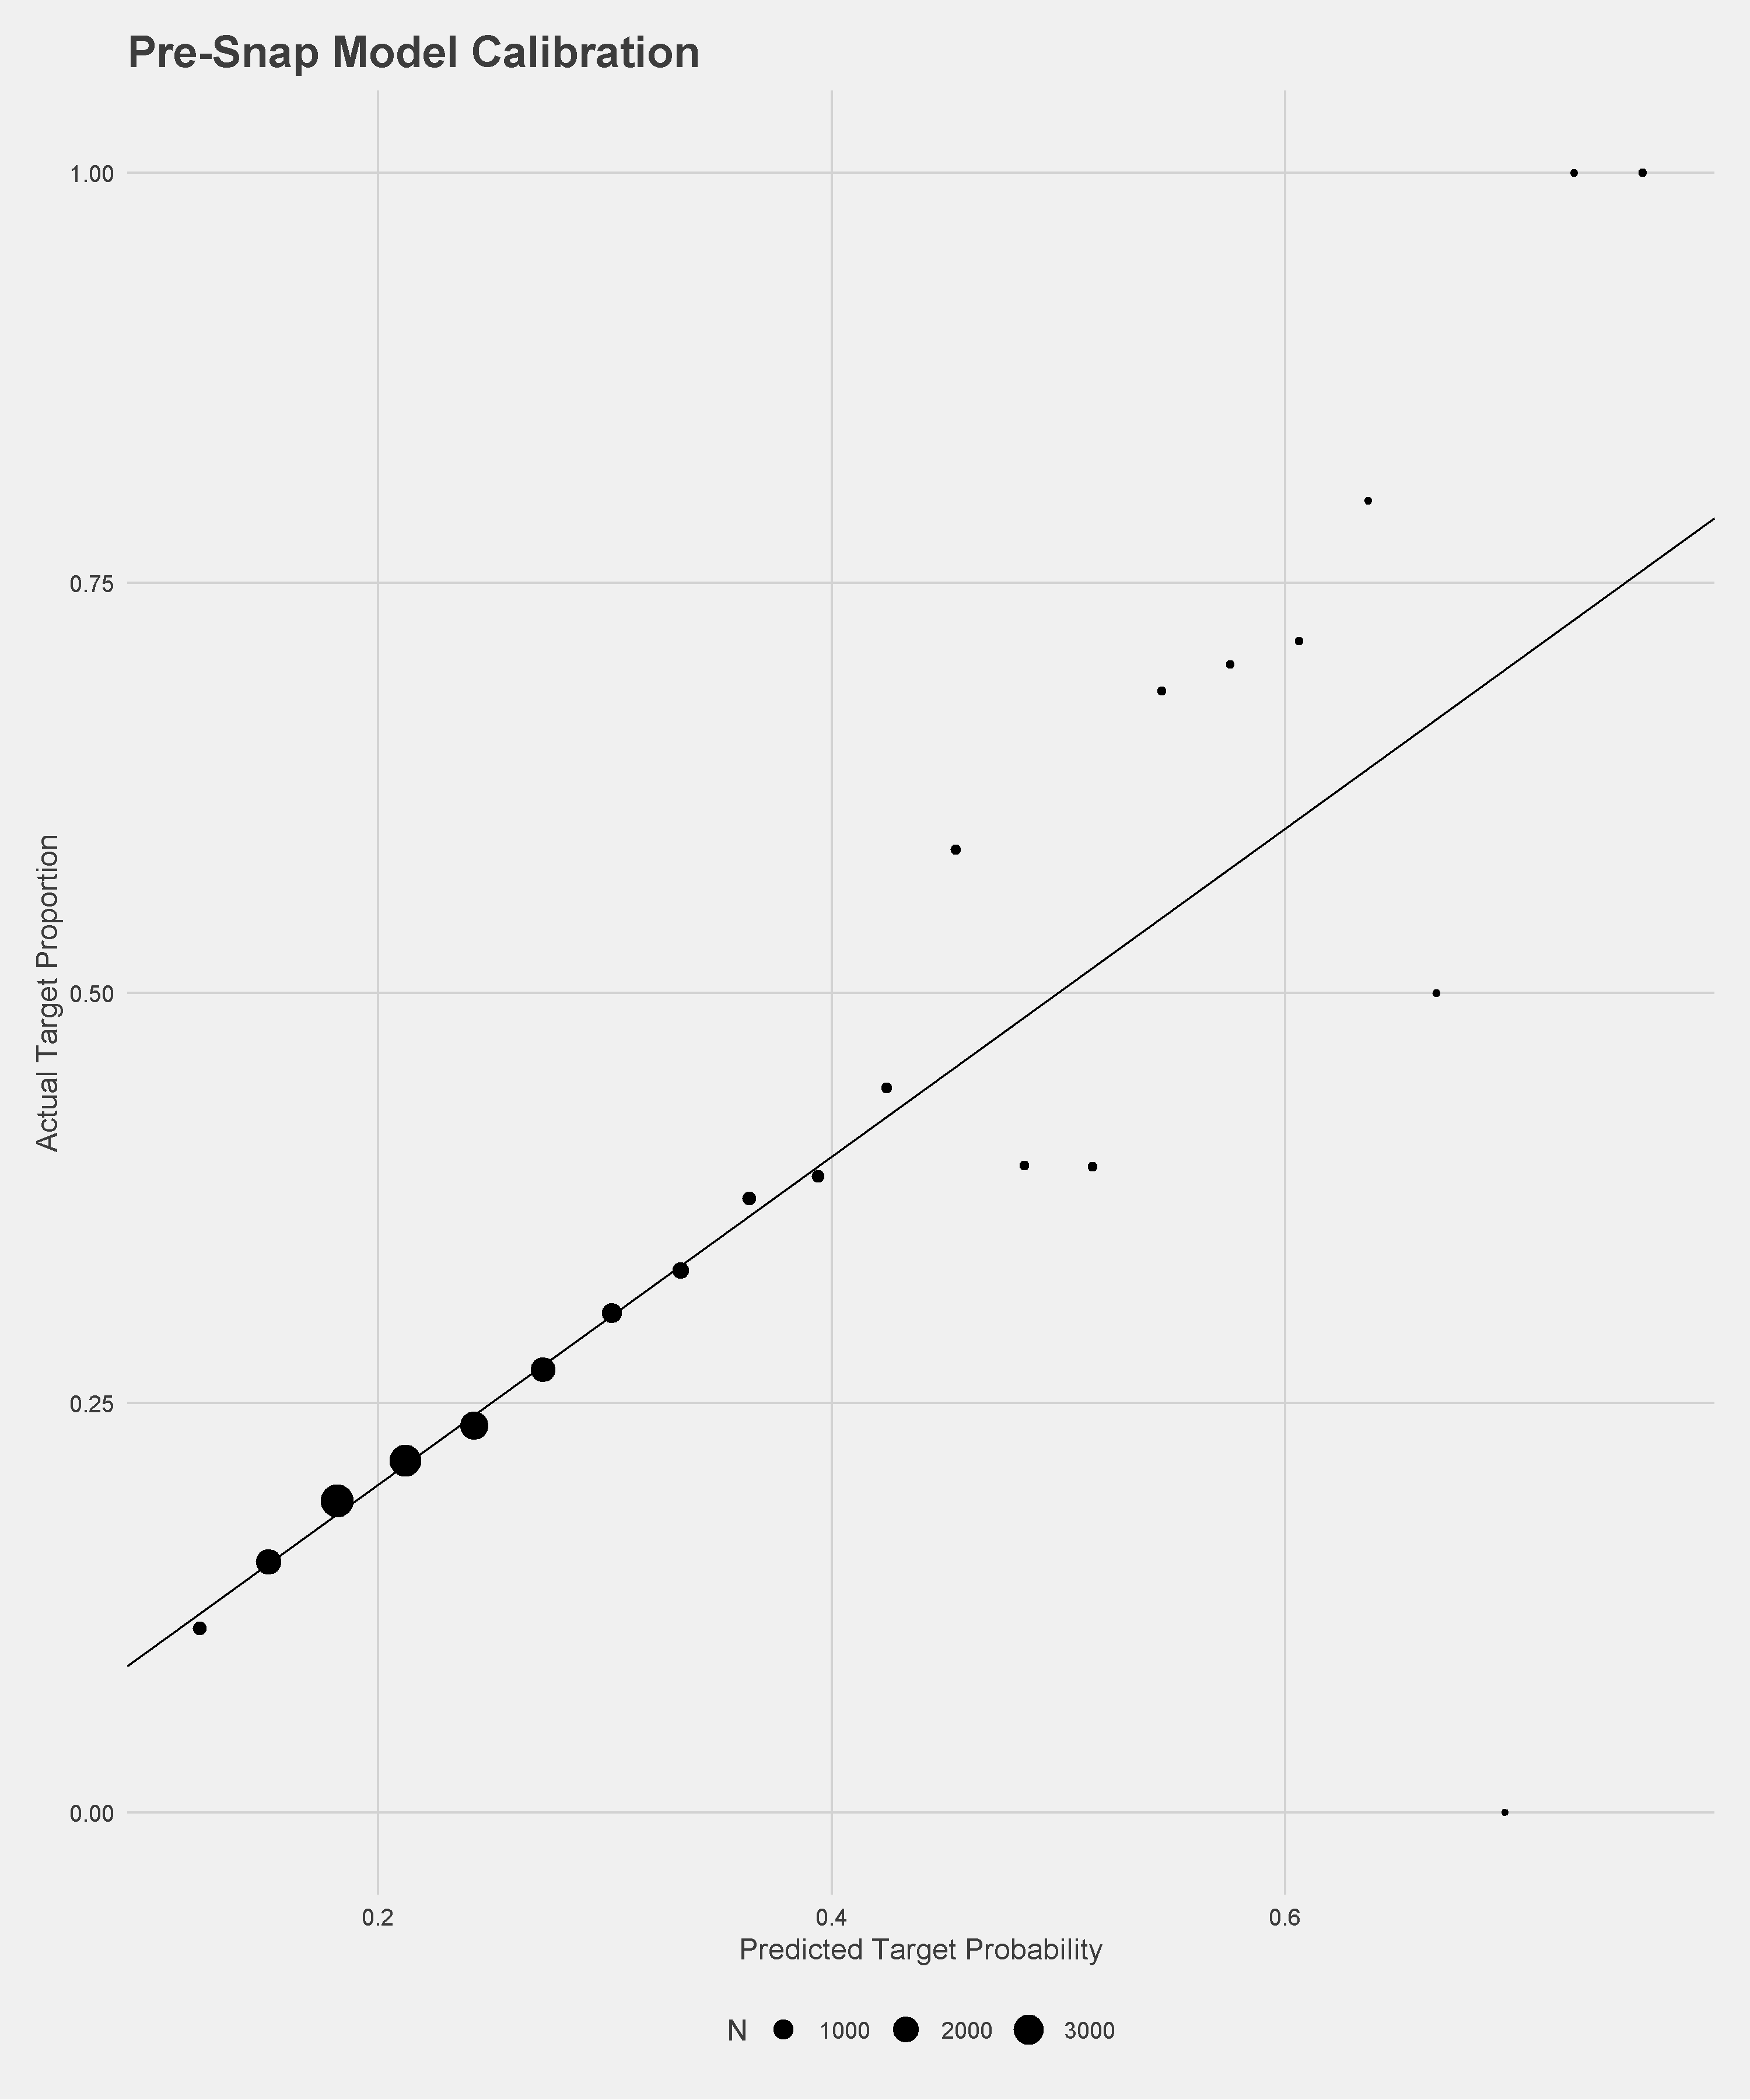 Target Probability Model Calibration Plots